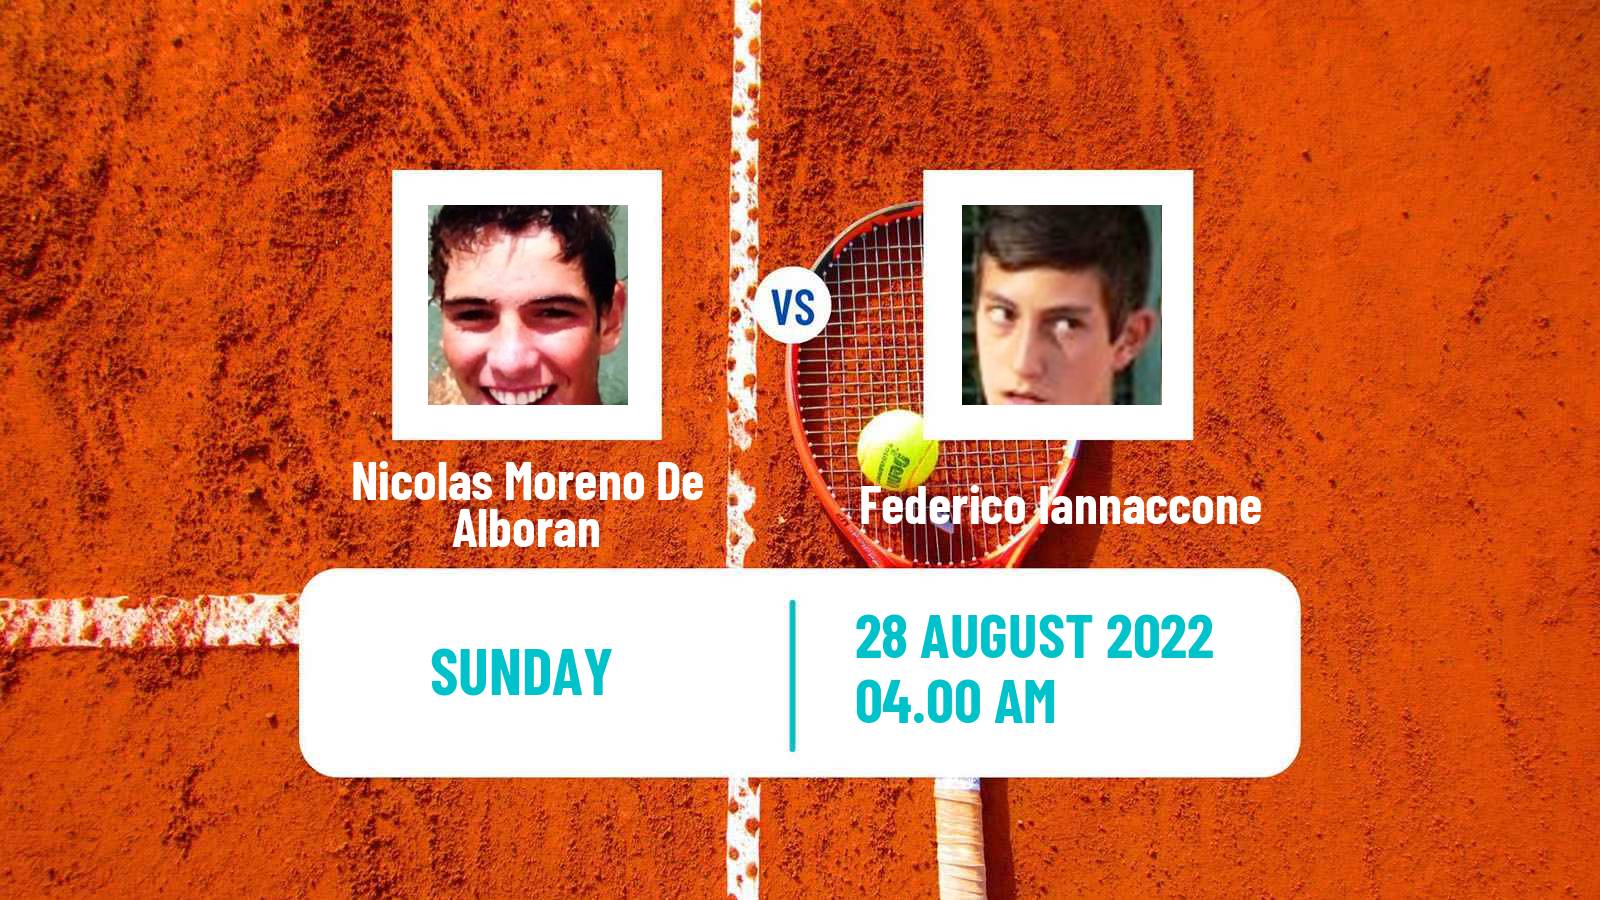 Tennis ATP Challenger Nicolas Moreno De Alboran - Federico Iannaccone